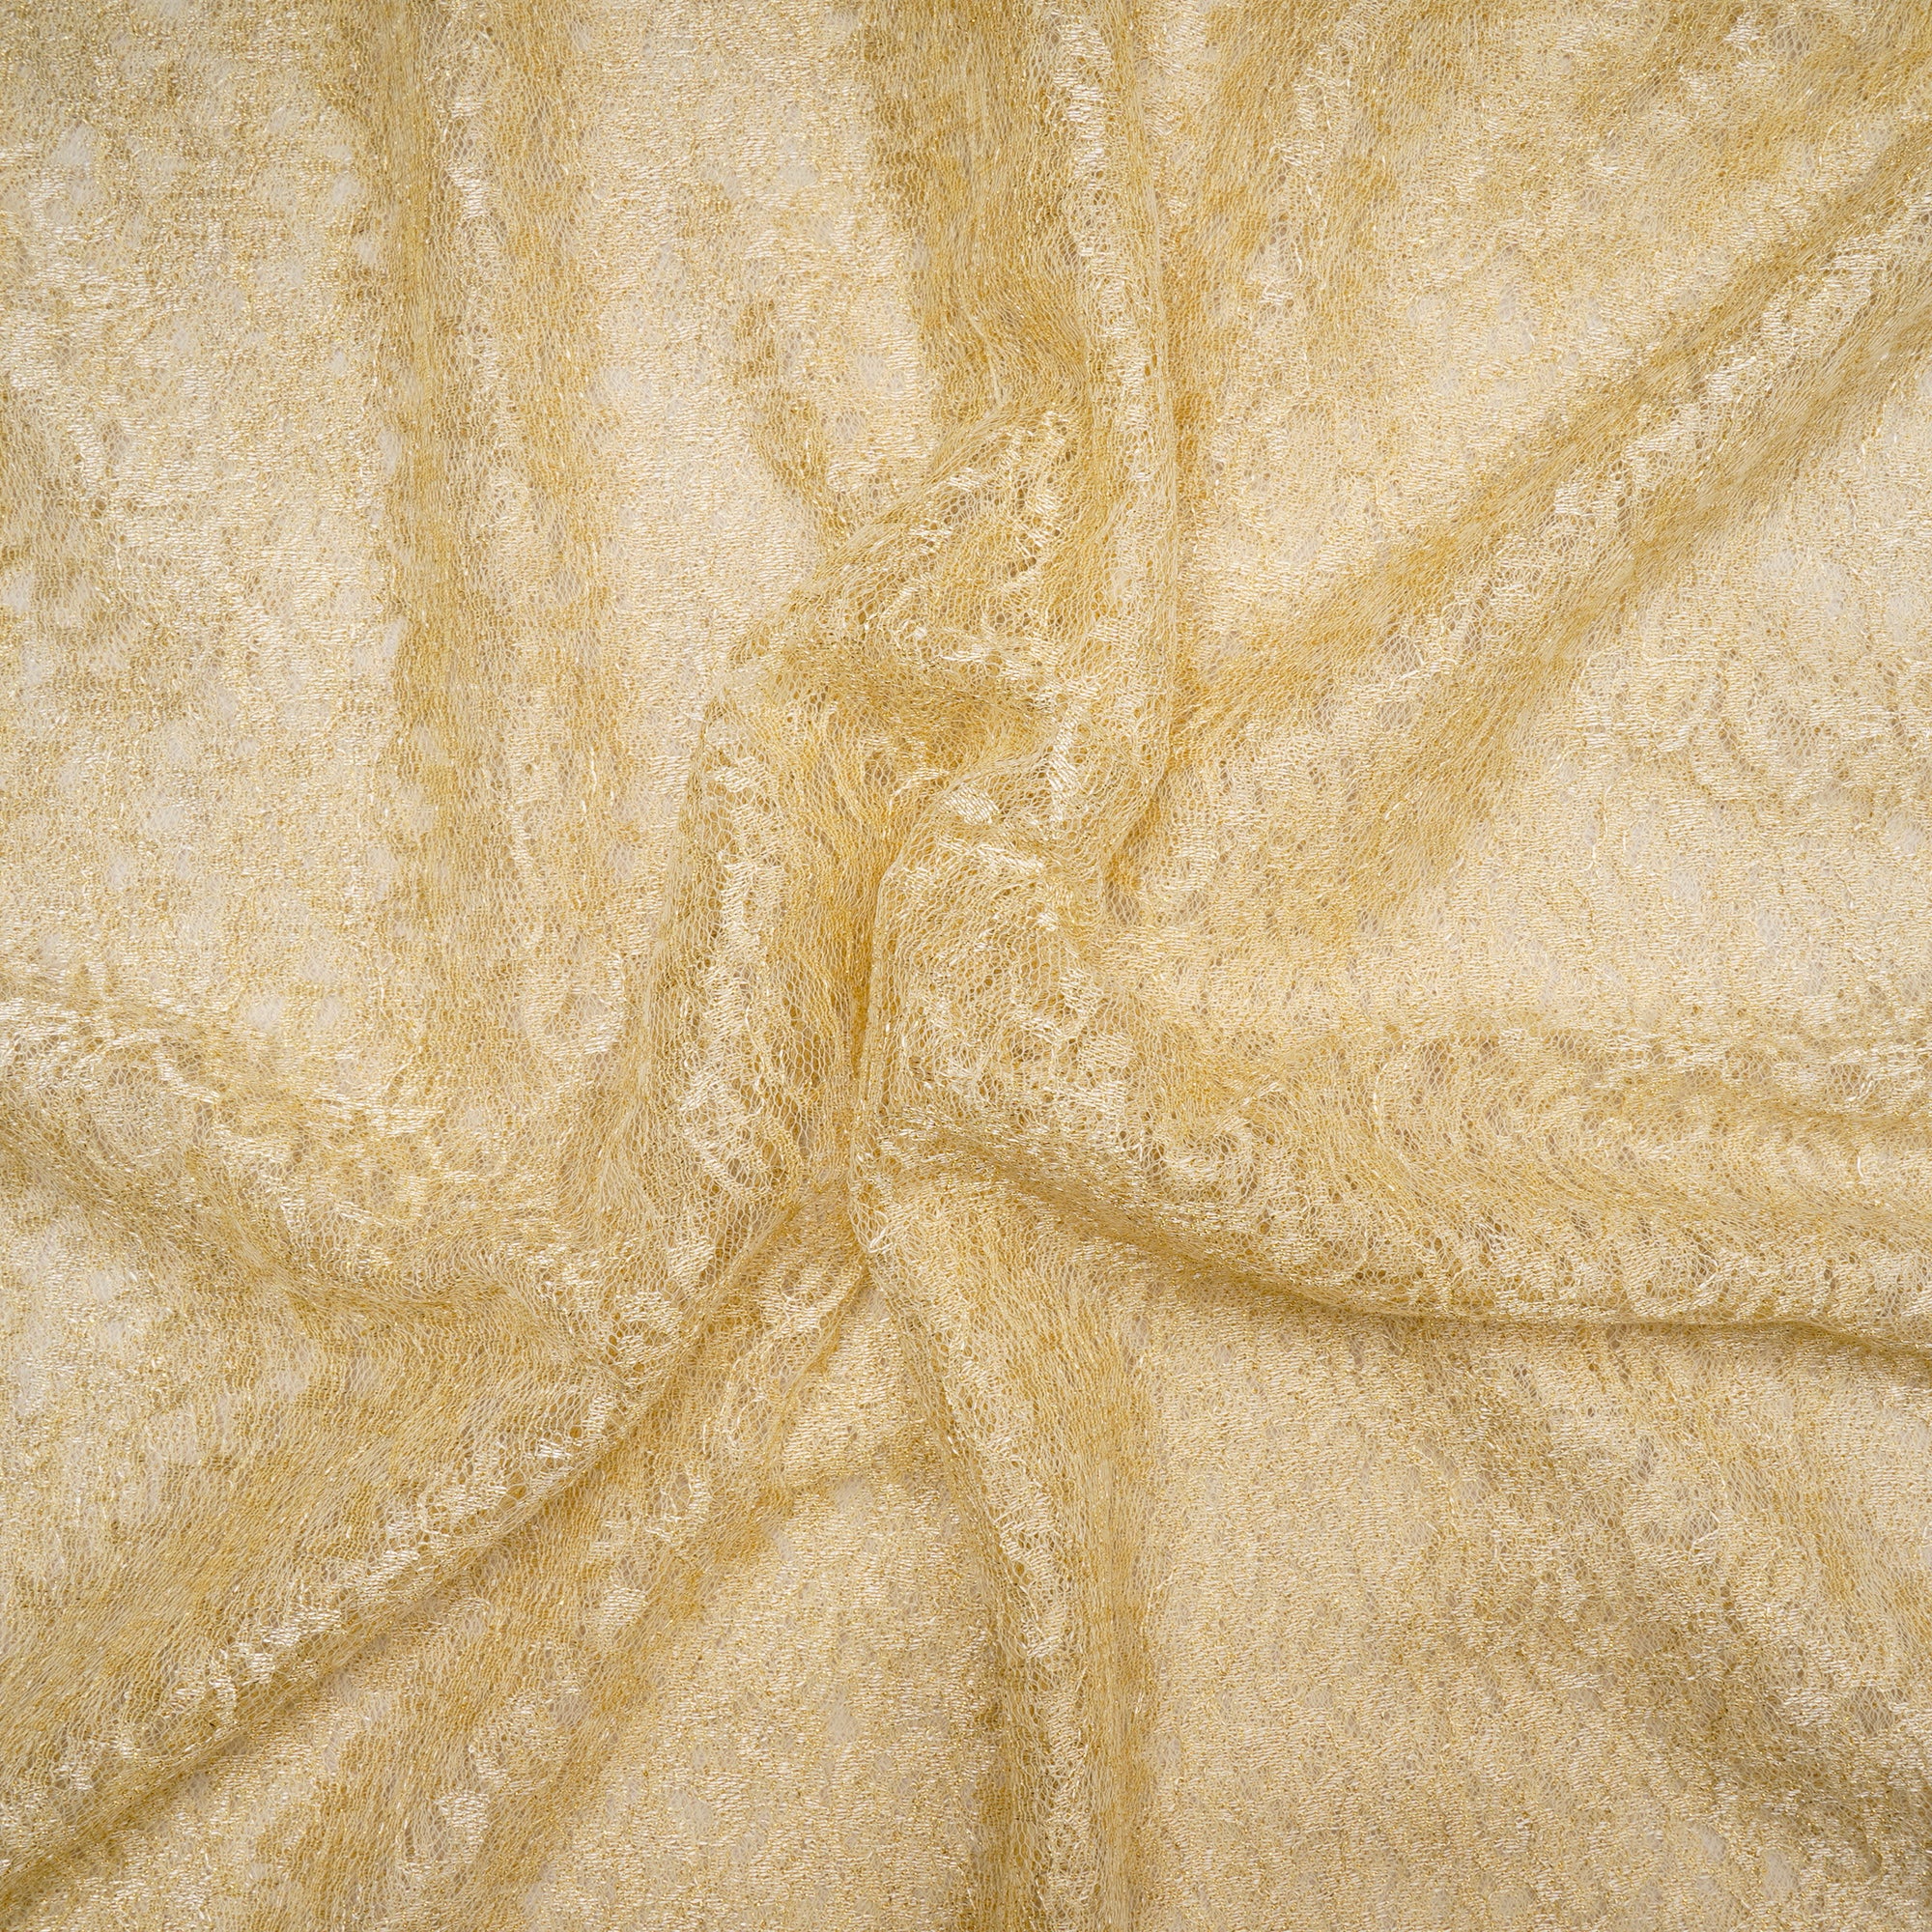 Off White-Golden Color Nylon Net Jacquard Fabric